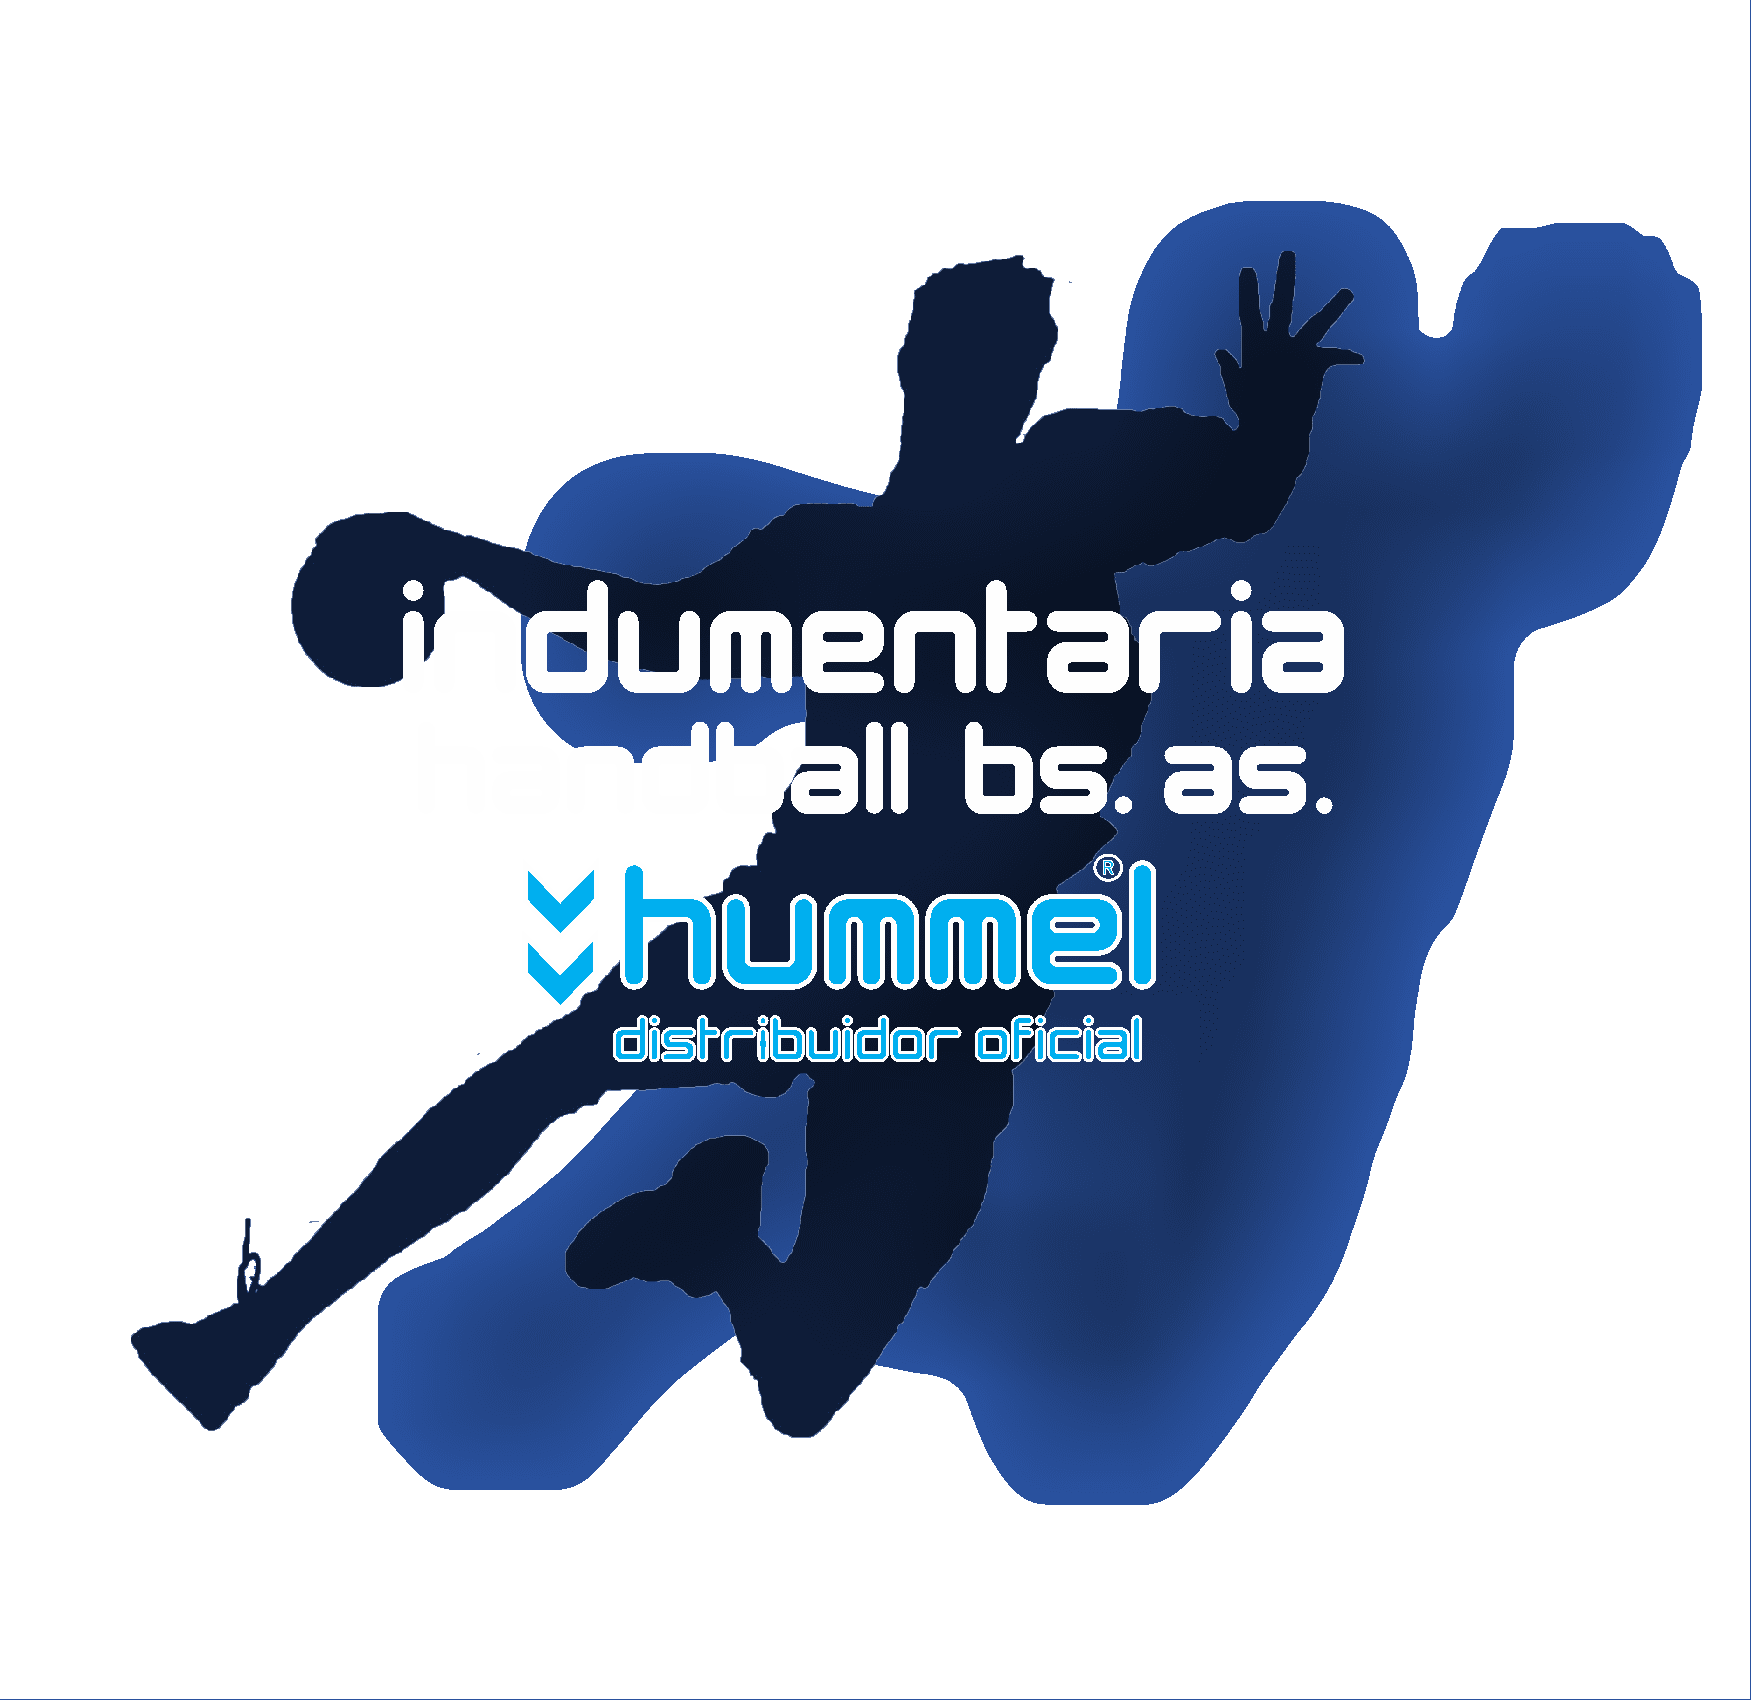 INDUMENTARIA HANDBALL BS AS